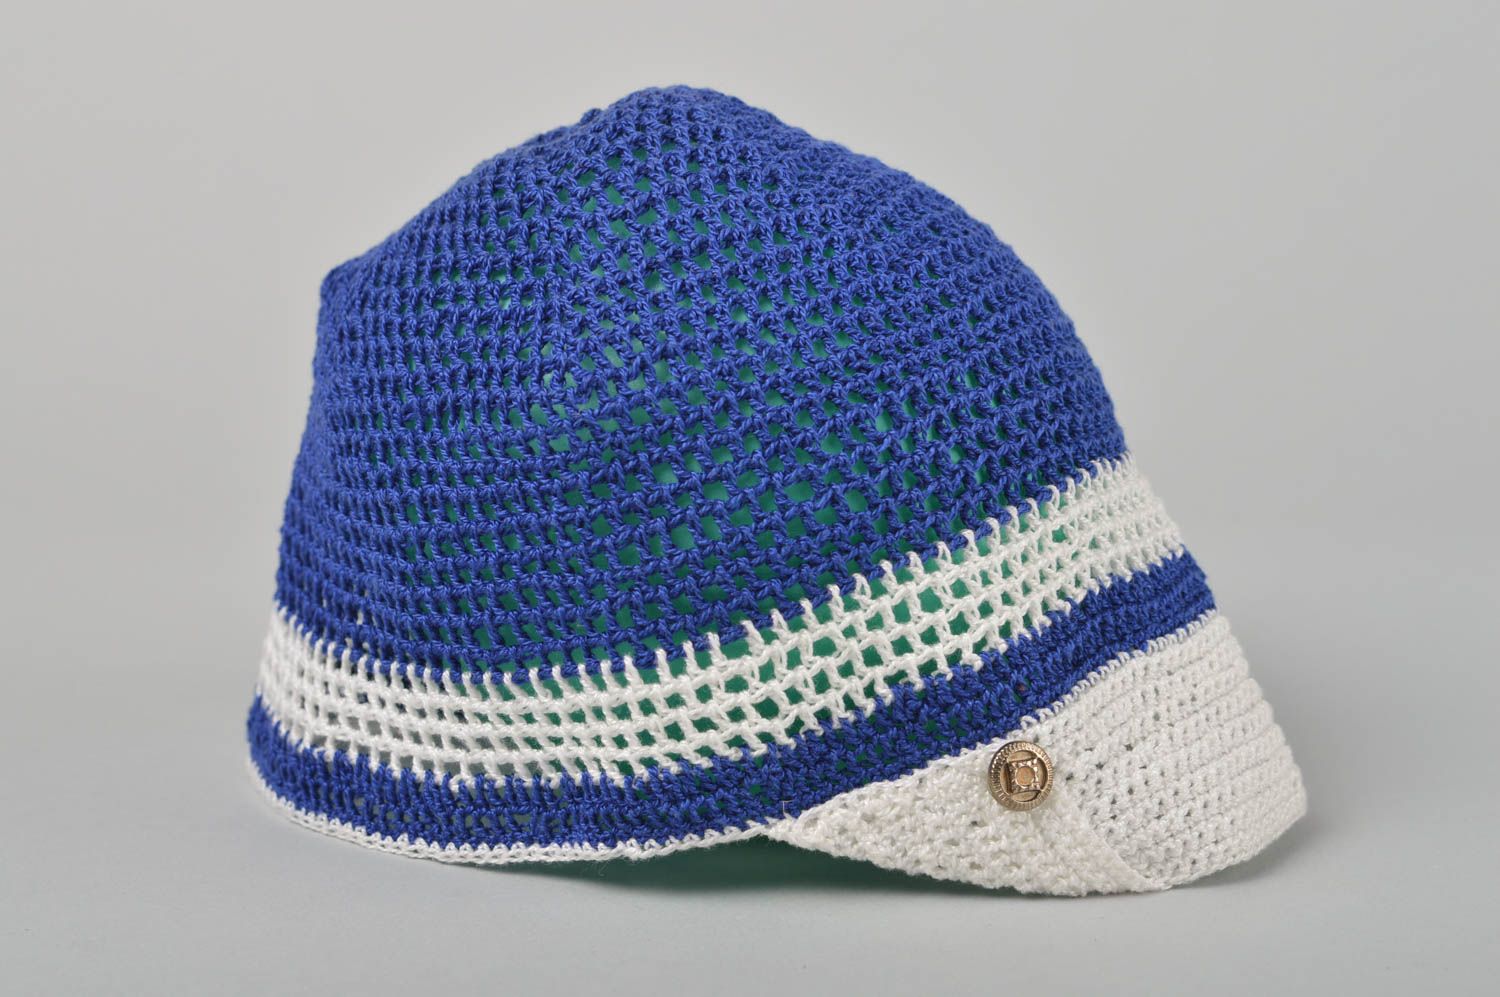 Handmade hat designer hat baby hat spring hat warm hat crocheted hat for baby photo 1